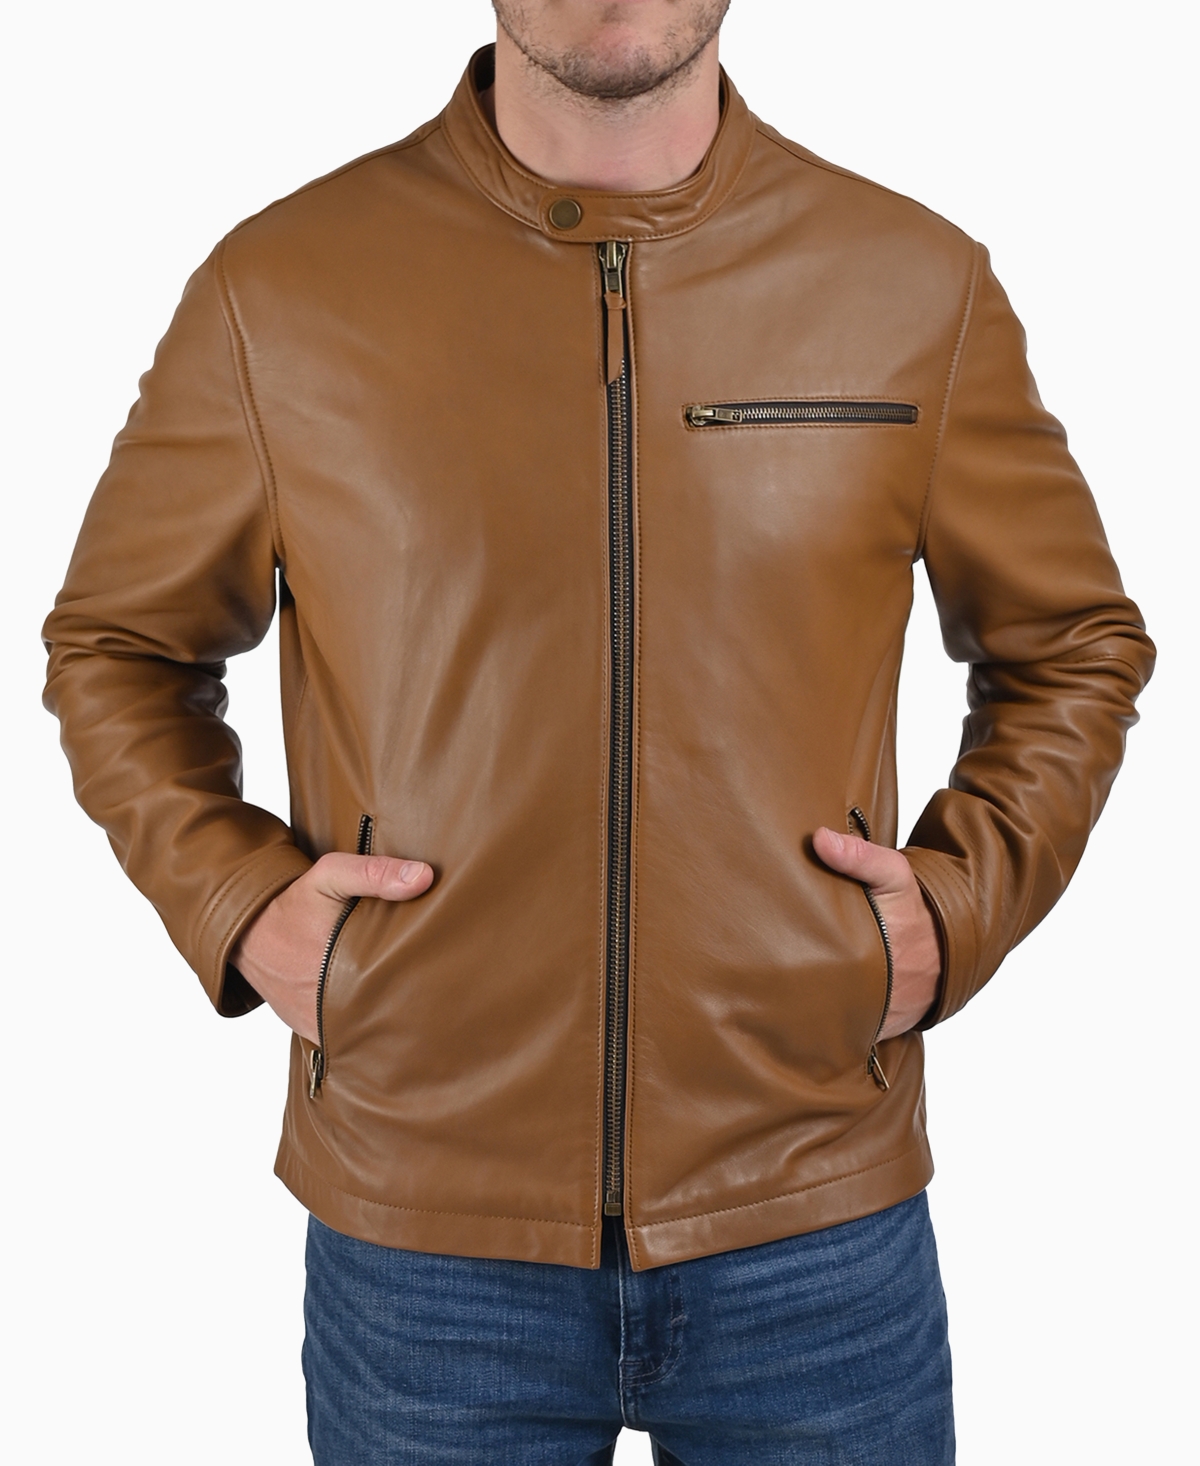 Frye Men's Classic Leather Cafe Racer Jacket